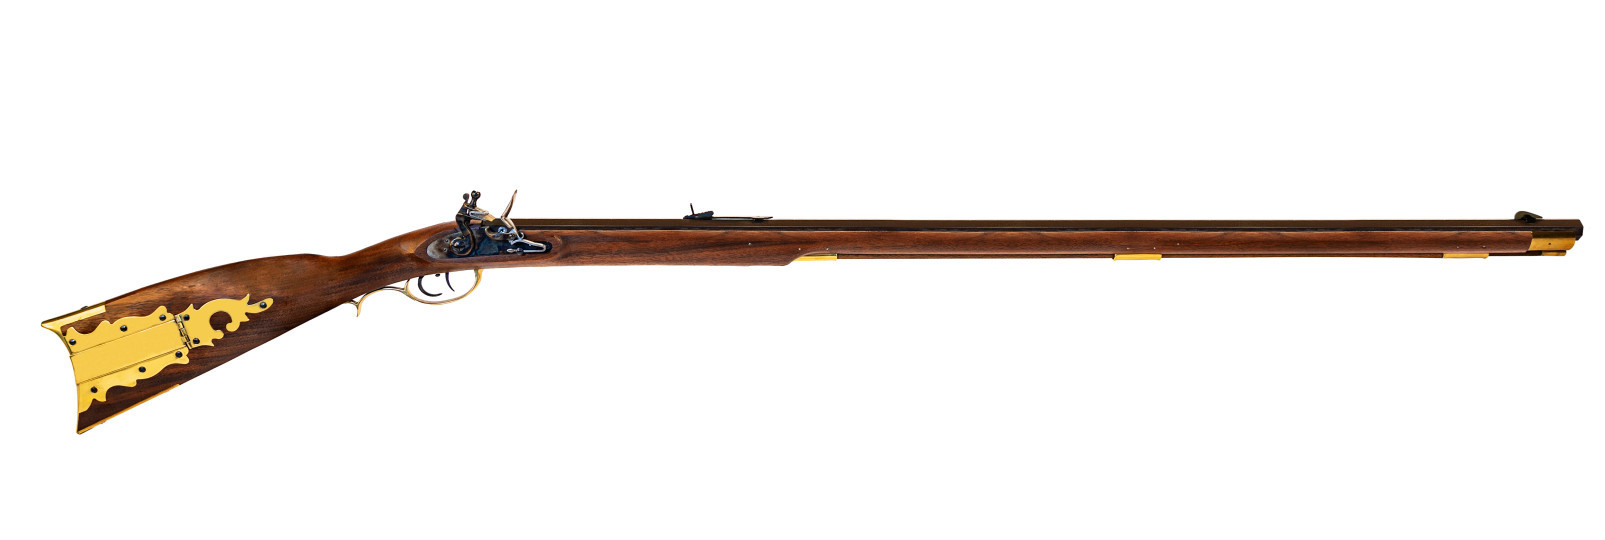 Pennsylvania Dixie Rifle flintlock model